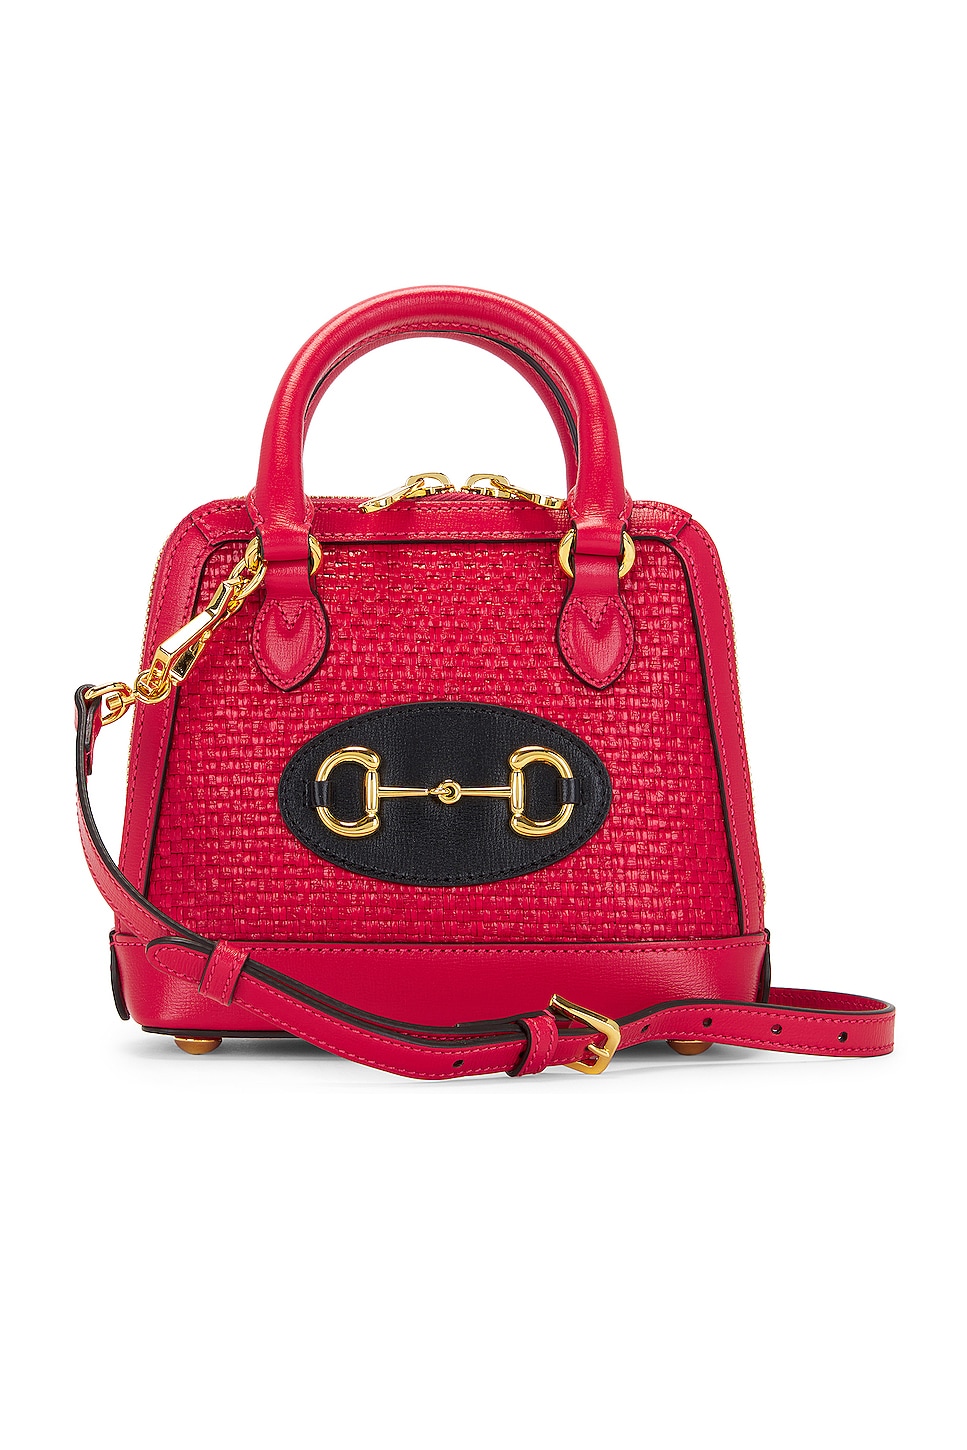 FWRD Renew Gucci Horsebit 1955 Top Handle Bag in Red